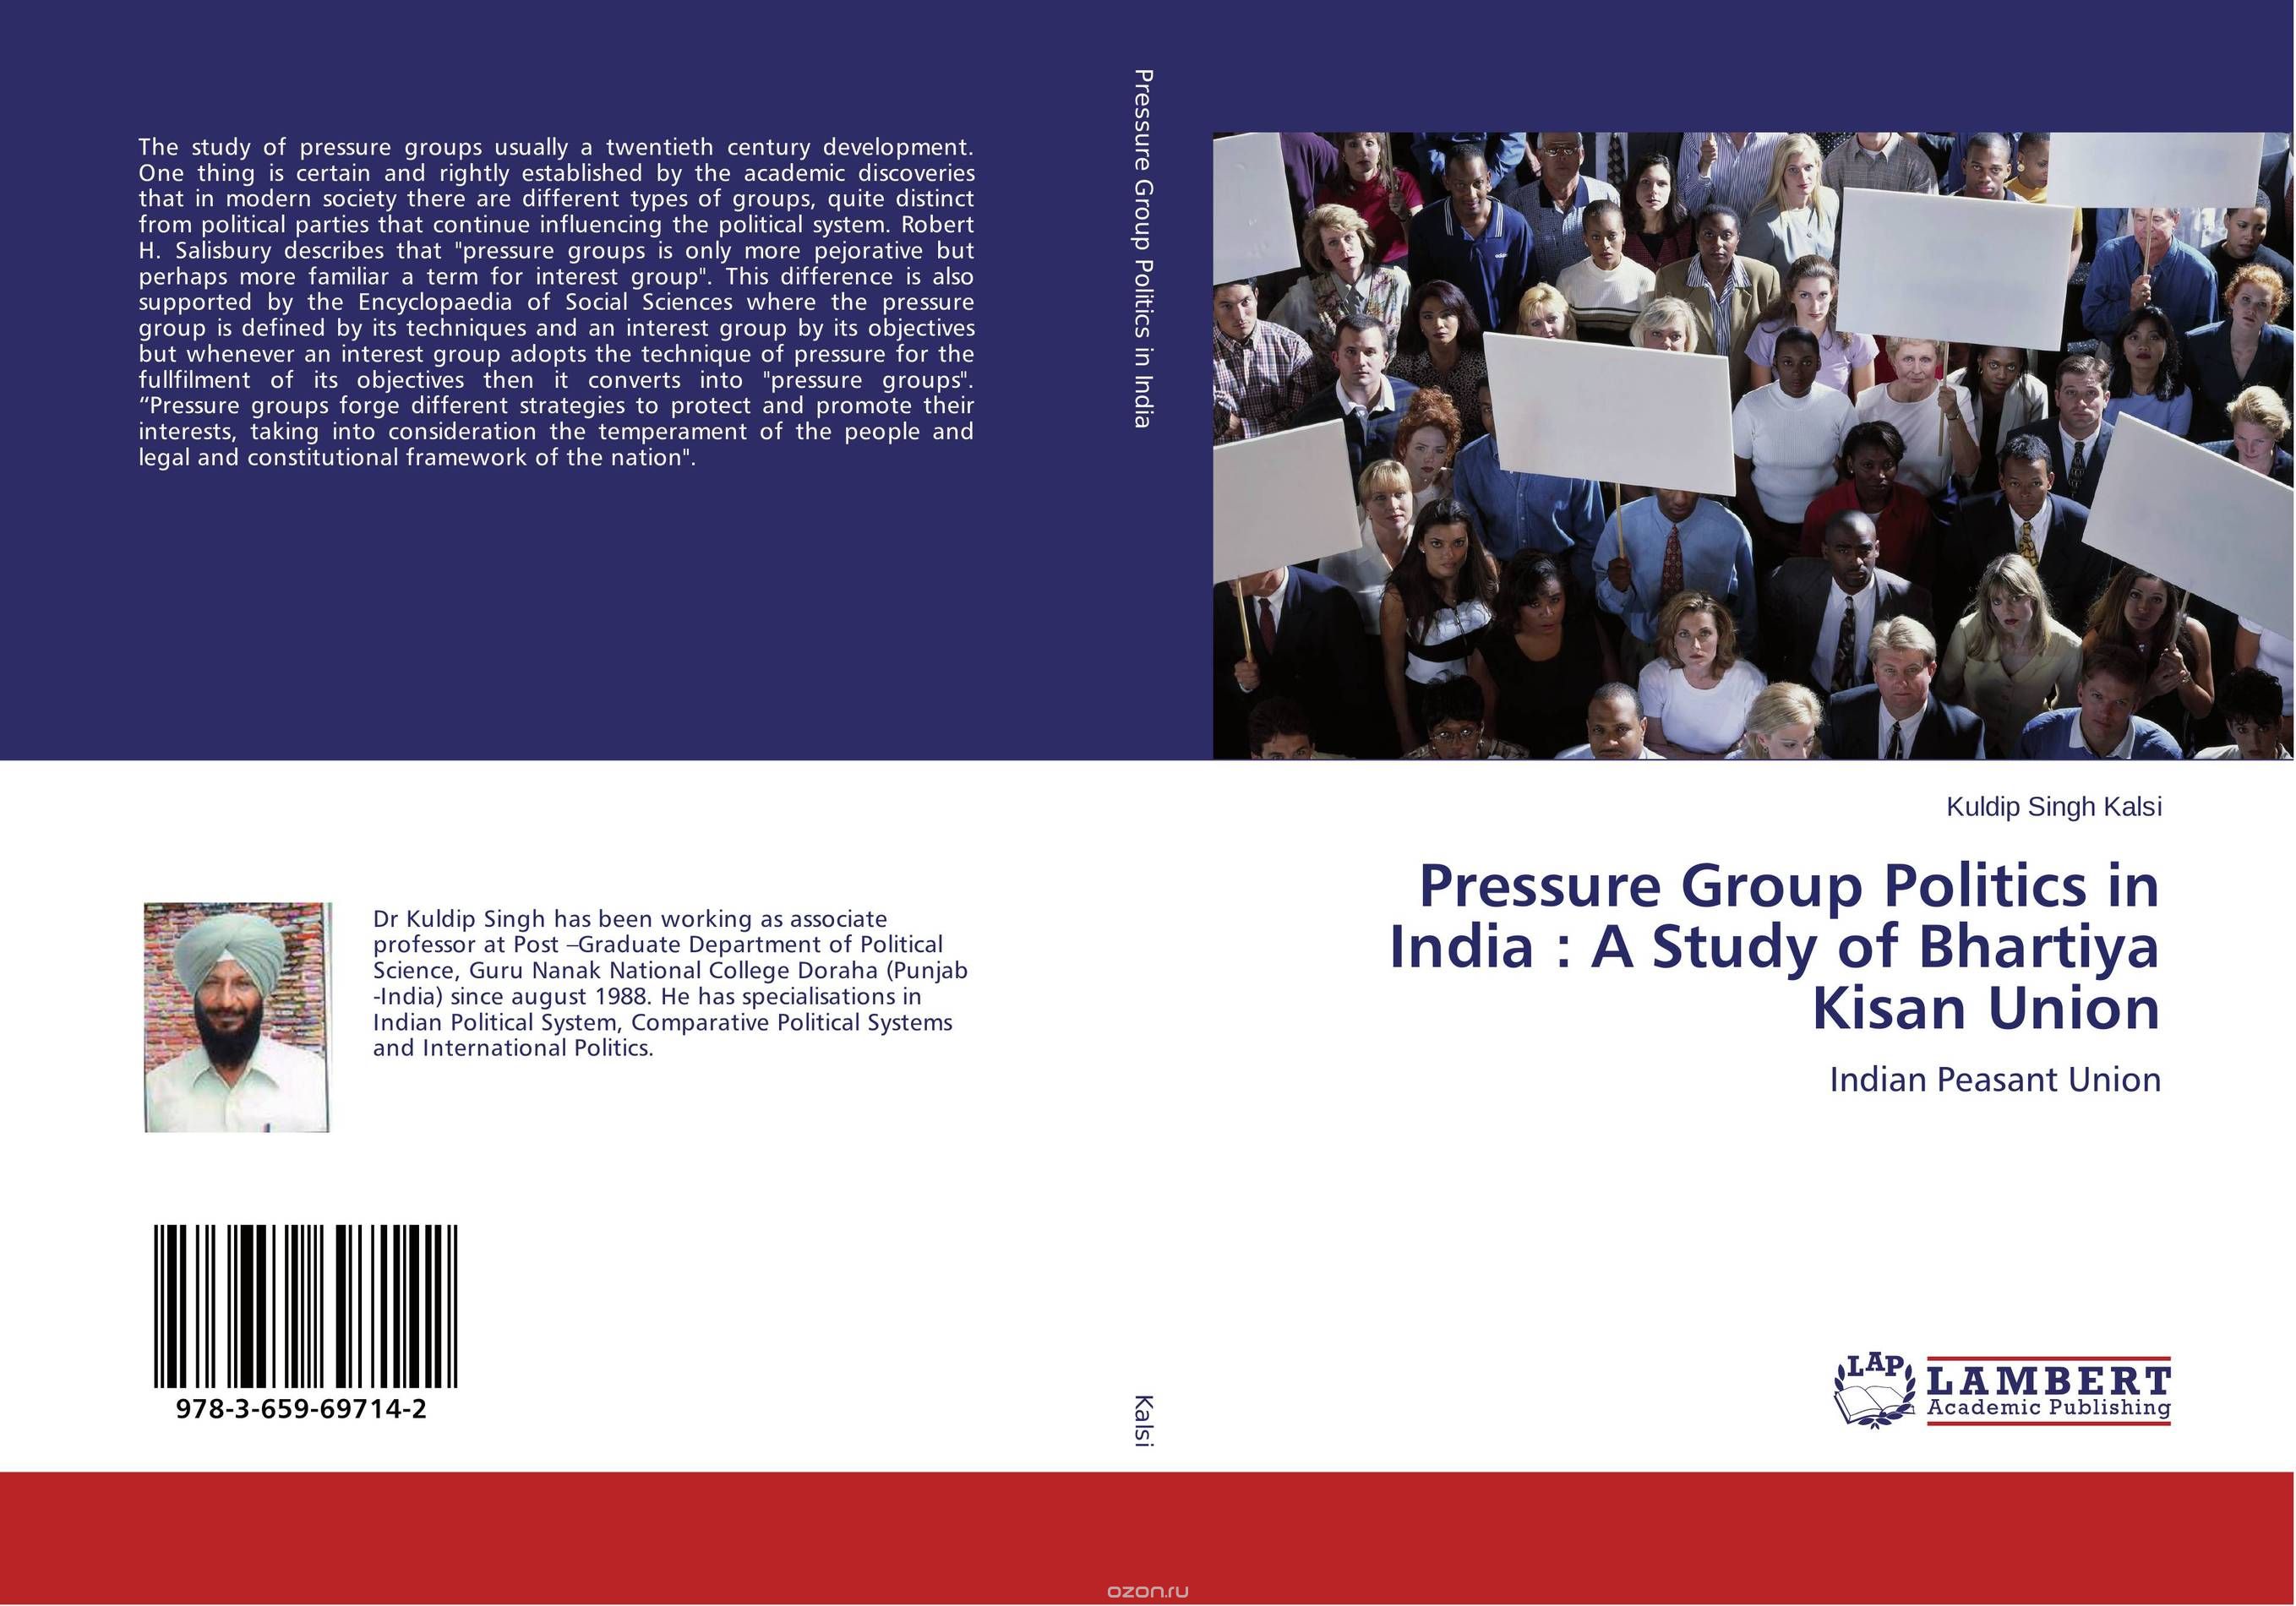 Pressure Group Politics in India : A Study of Bhartiya Kisan Union